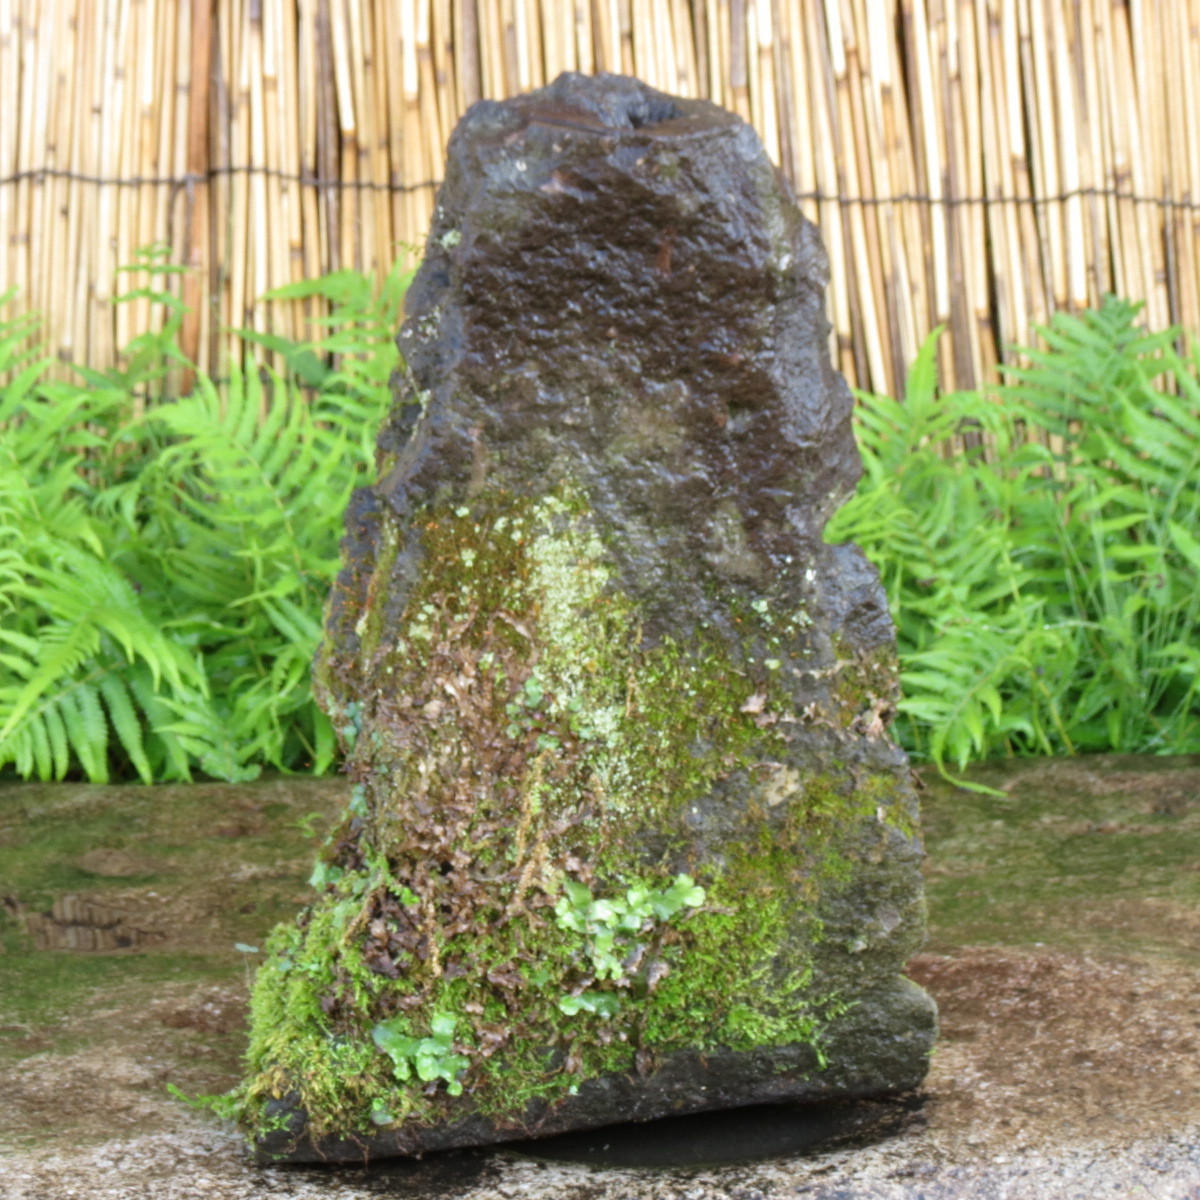  garden stone height 42.5. weight 14. stone pot stone light .